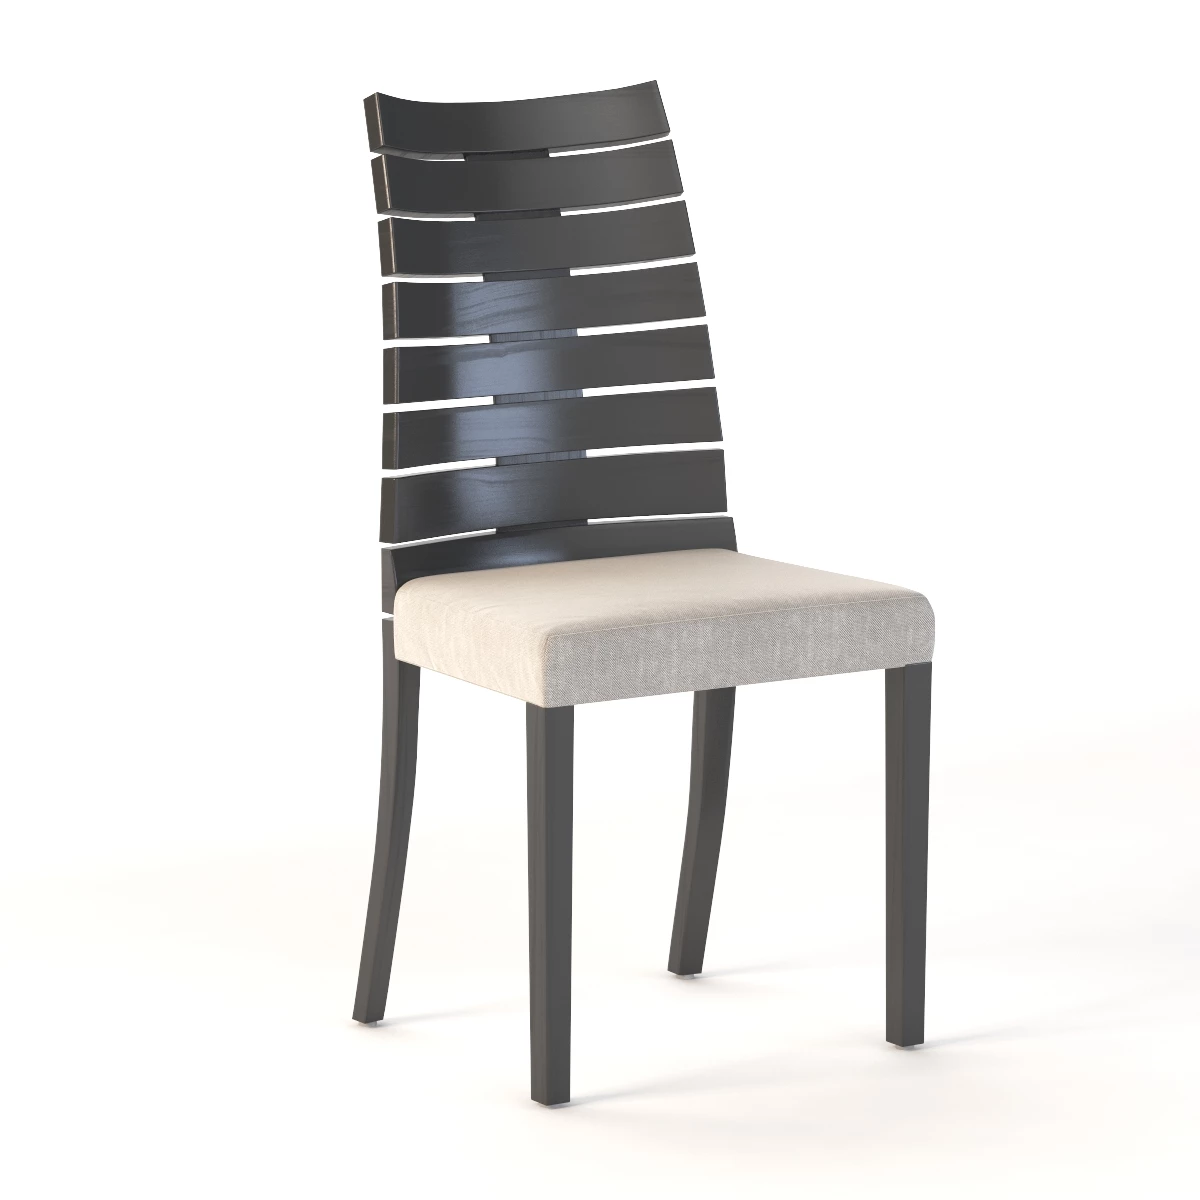 Nella Vetrina Costantini Pietro Charm 9163 Modern Italian Chair 3D Model_01